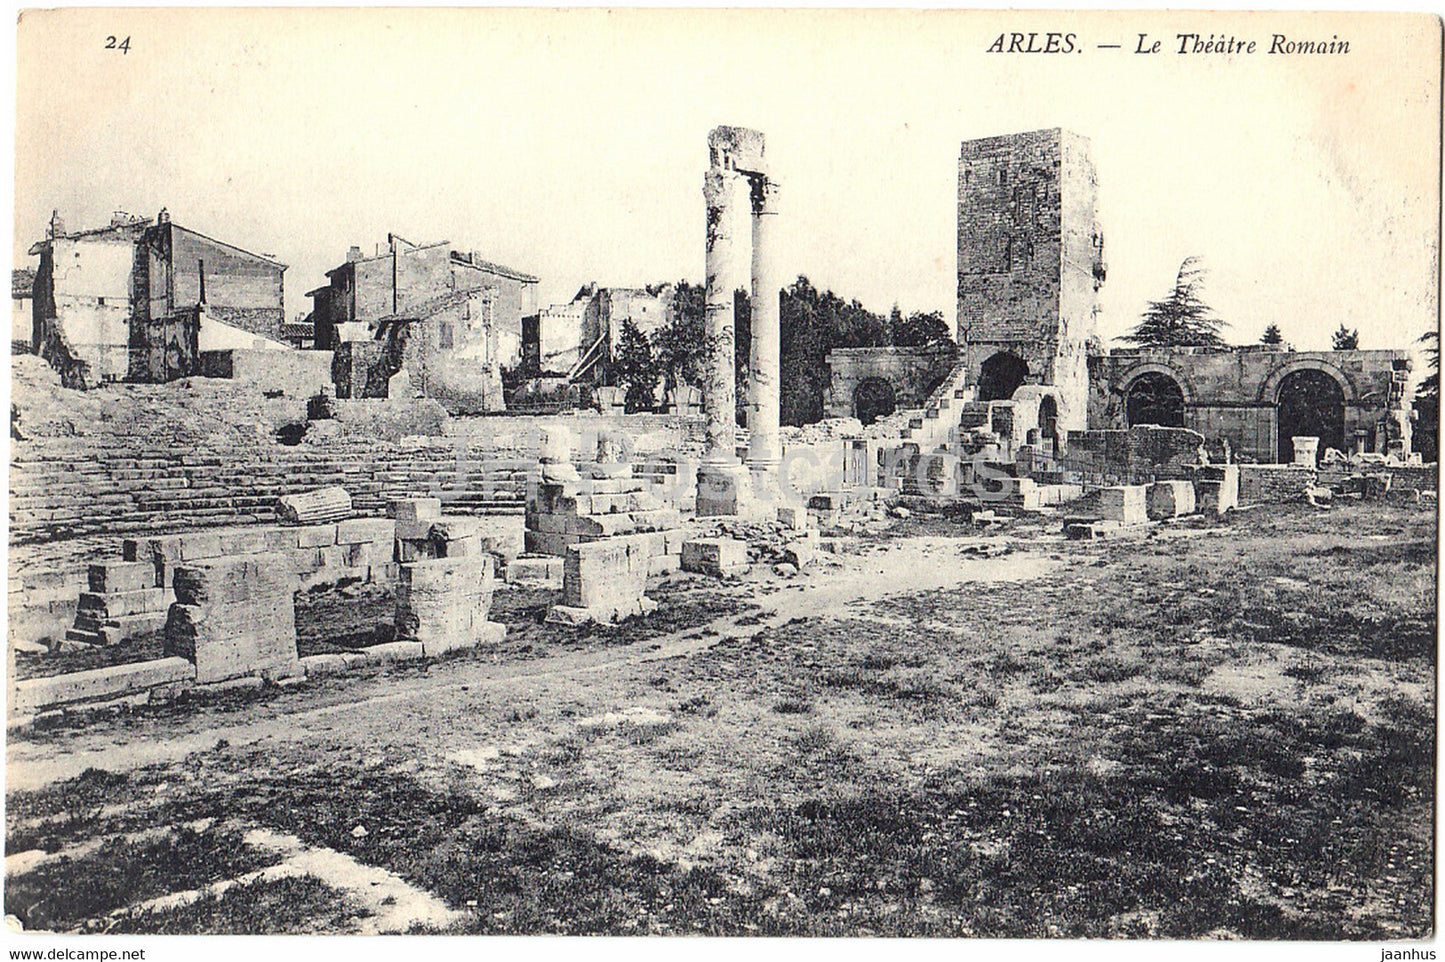 Arles - Le Theatre Romain - ancient - 24 - old postcard - France - unused - JH Postcards